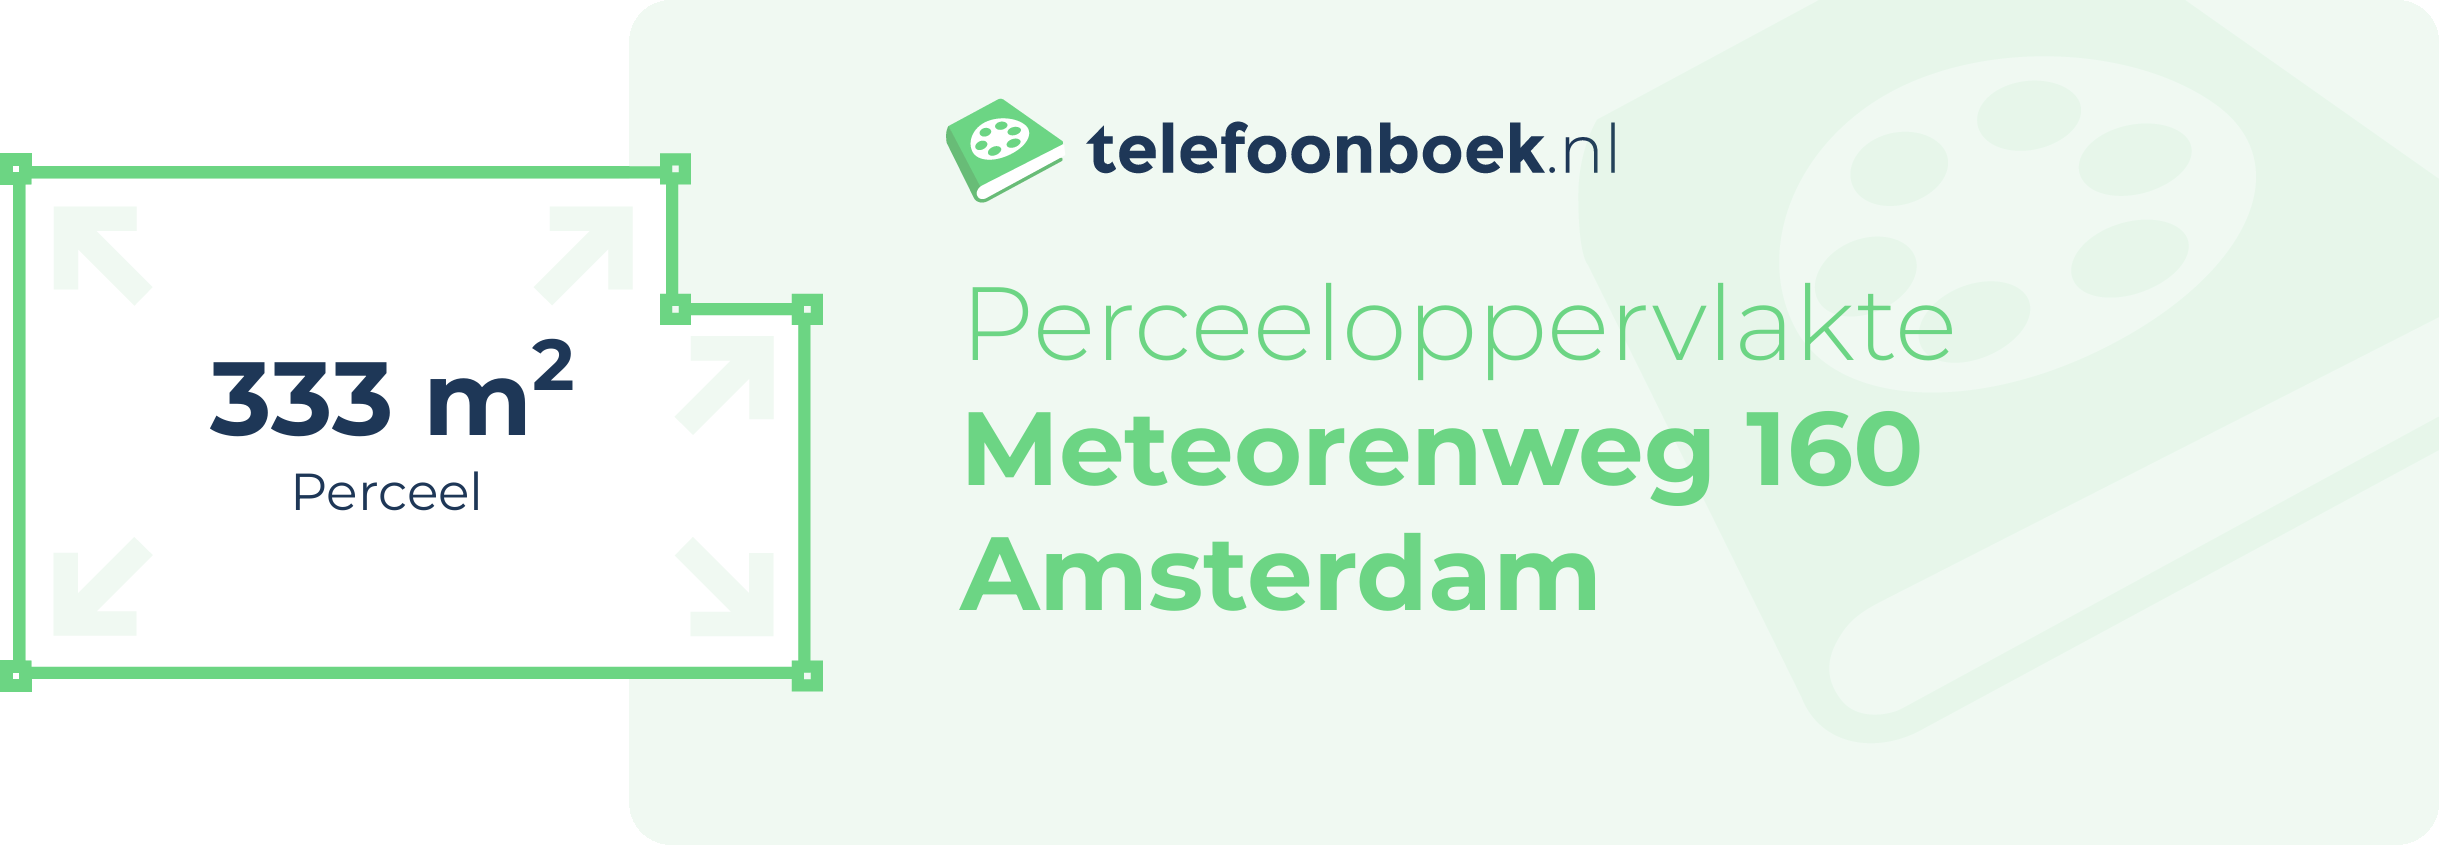 Perceeloppervlakte Meteorenweg 160 Amsterdam